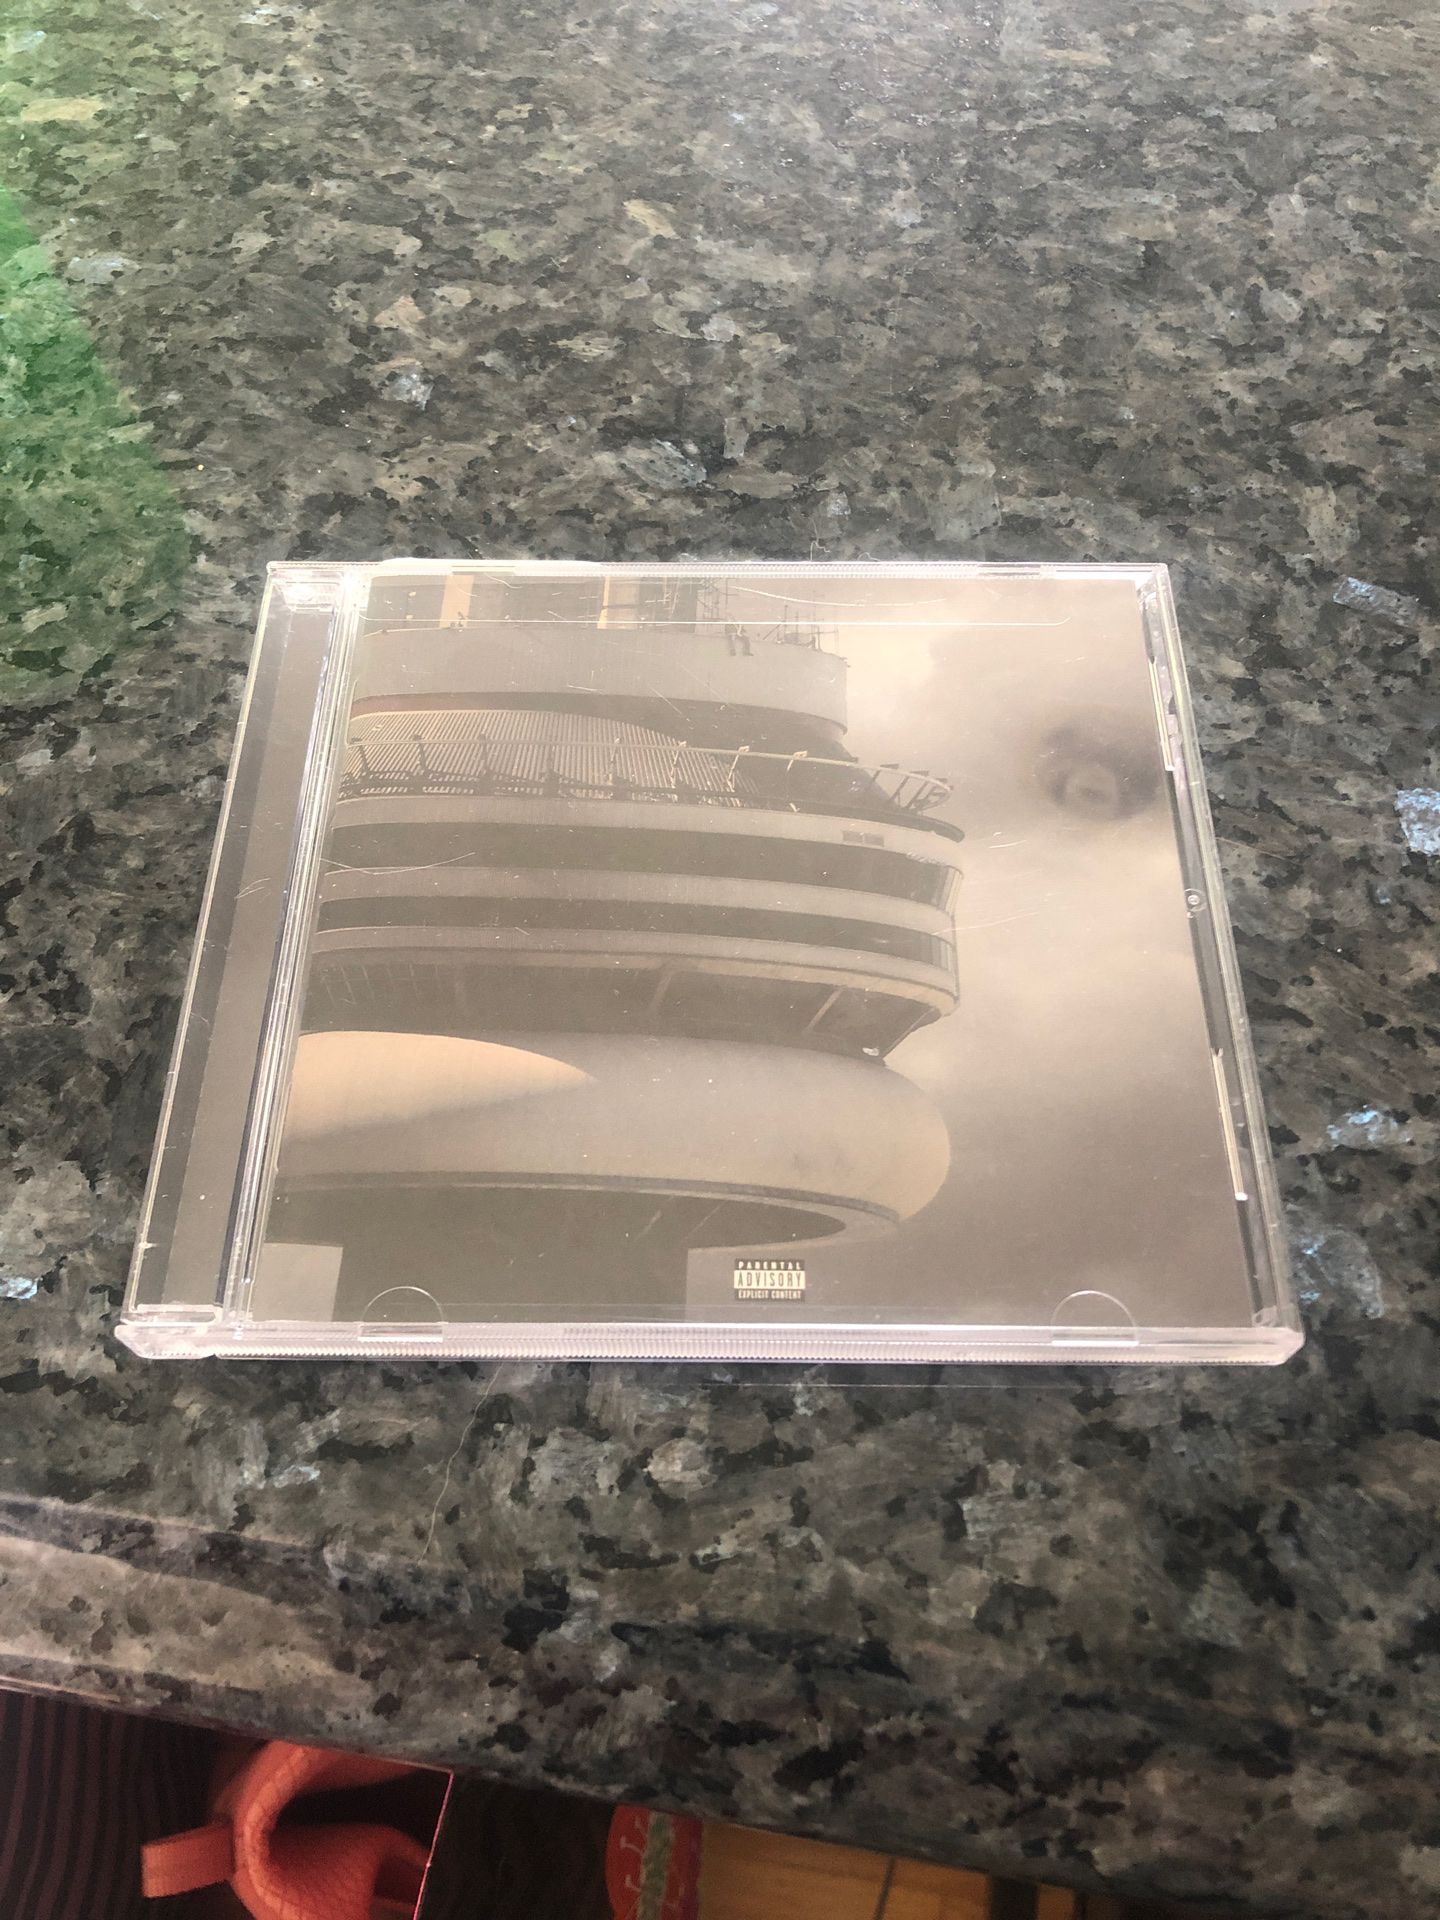 Drake’s VIEW CD